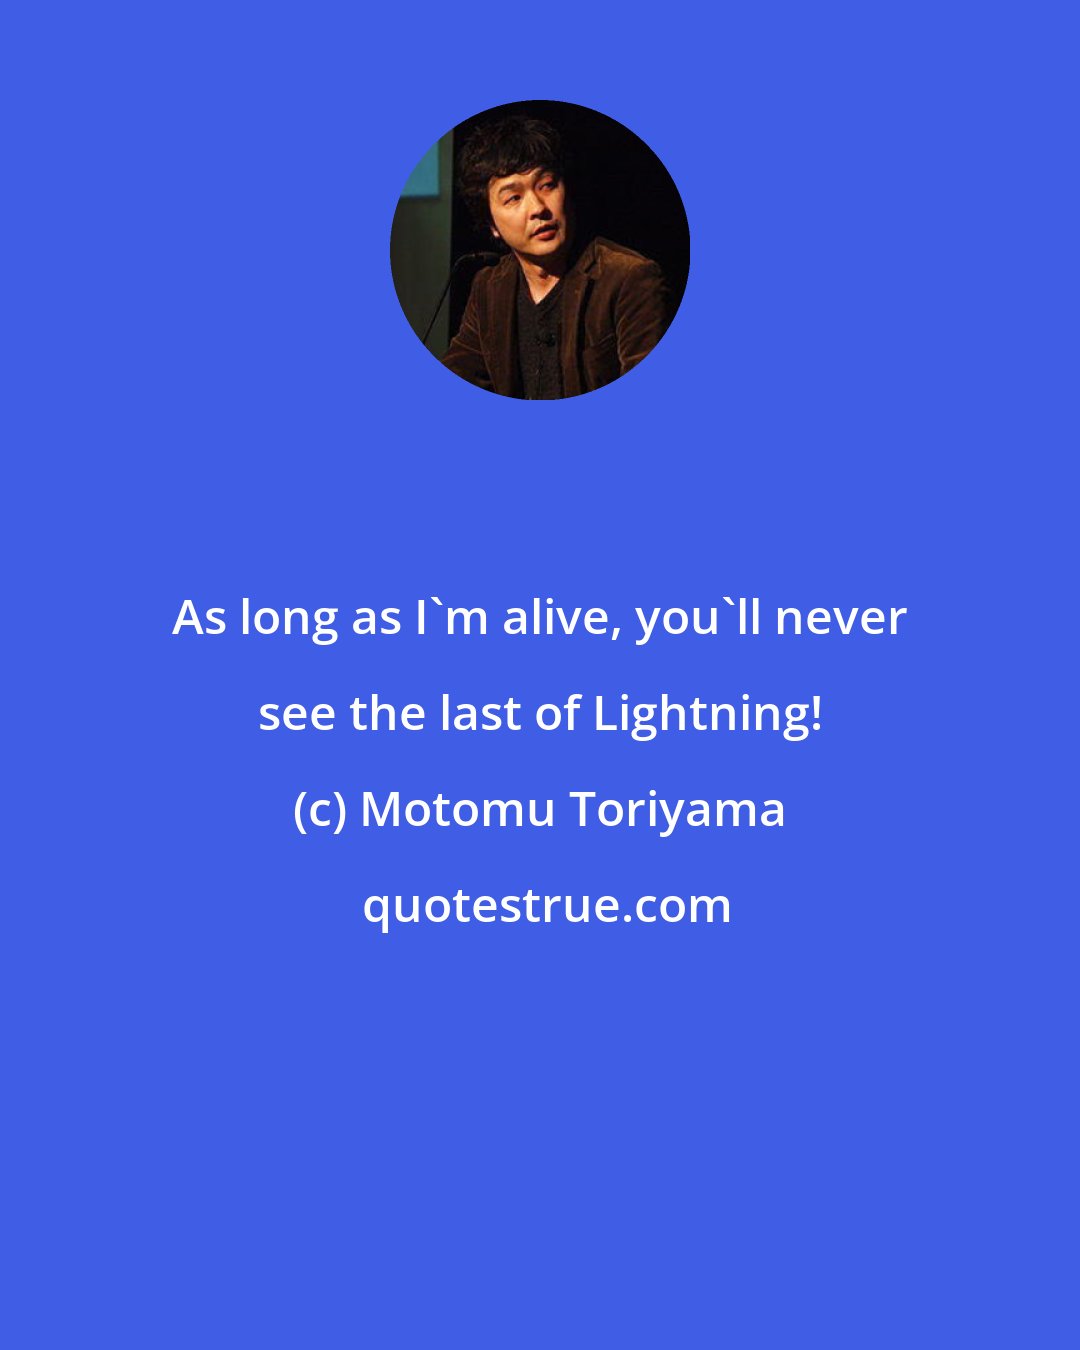 Motomu Toriyama: As long as I'm alive, you'll never see the last of Lightning!